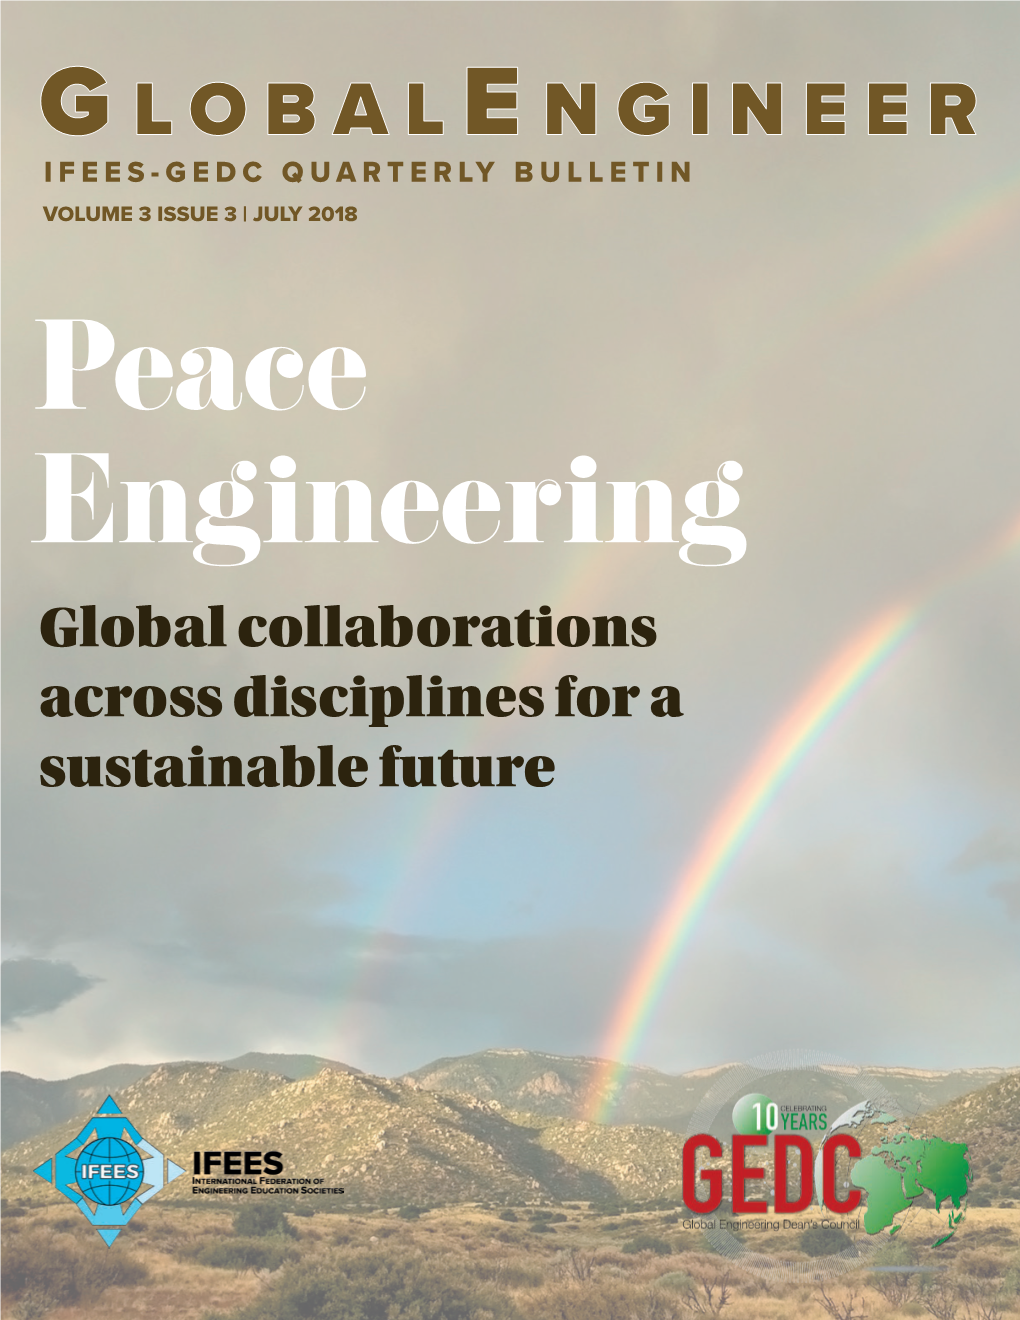 Peace Engineering